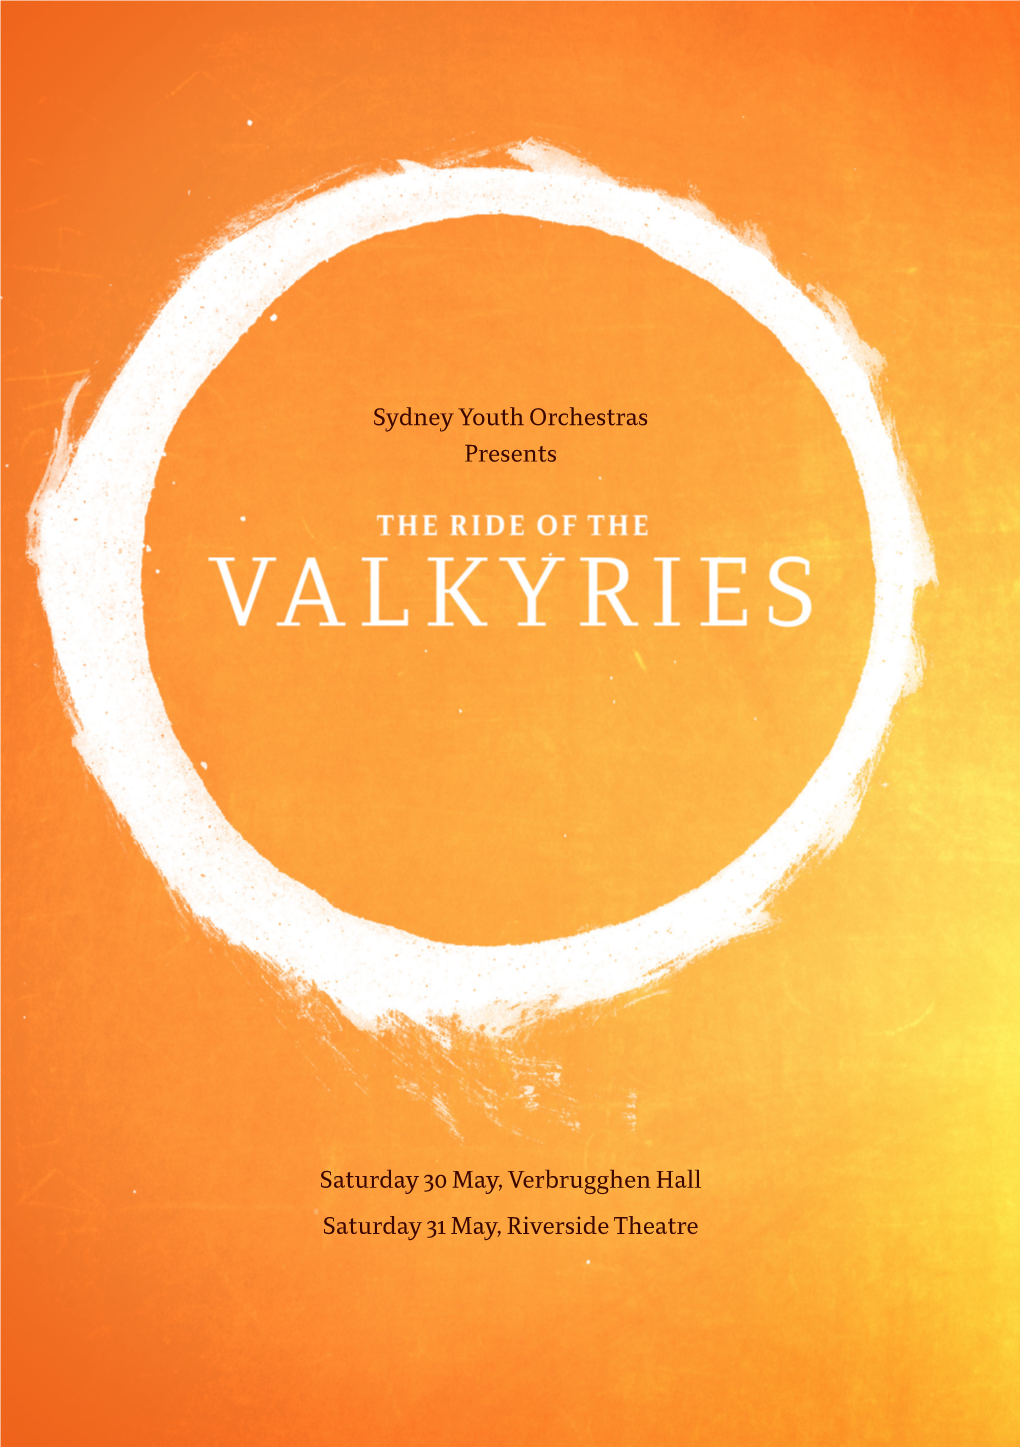 Sydney Youth Orchestras Presents Saturday 30 May, Verbrugghen Hall